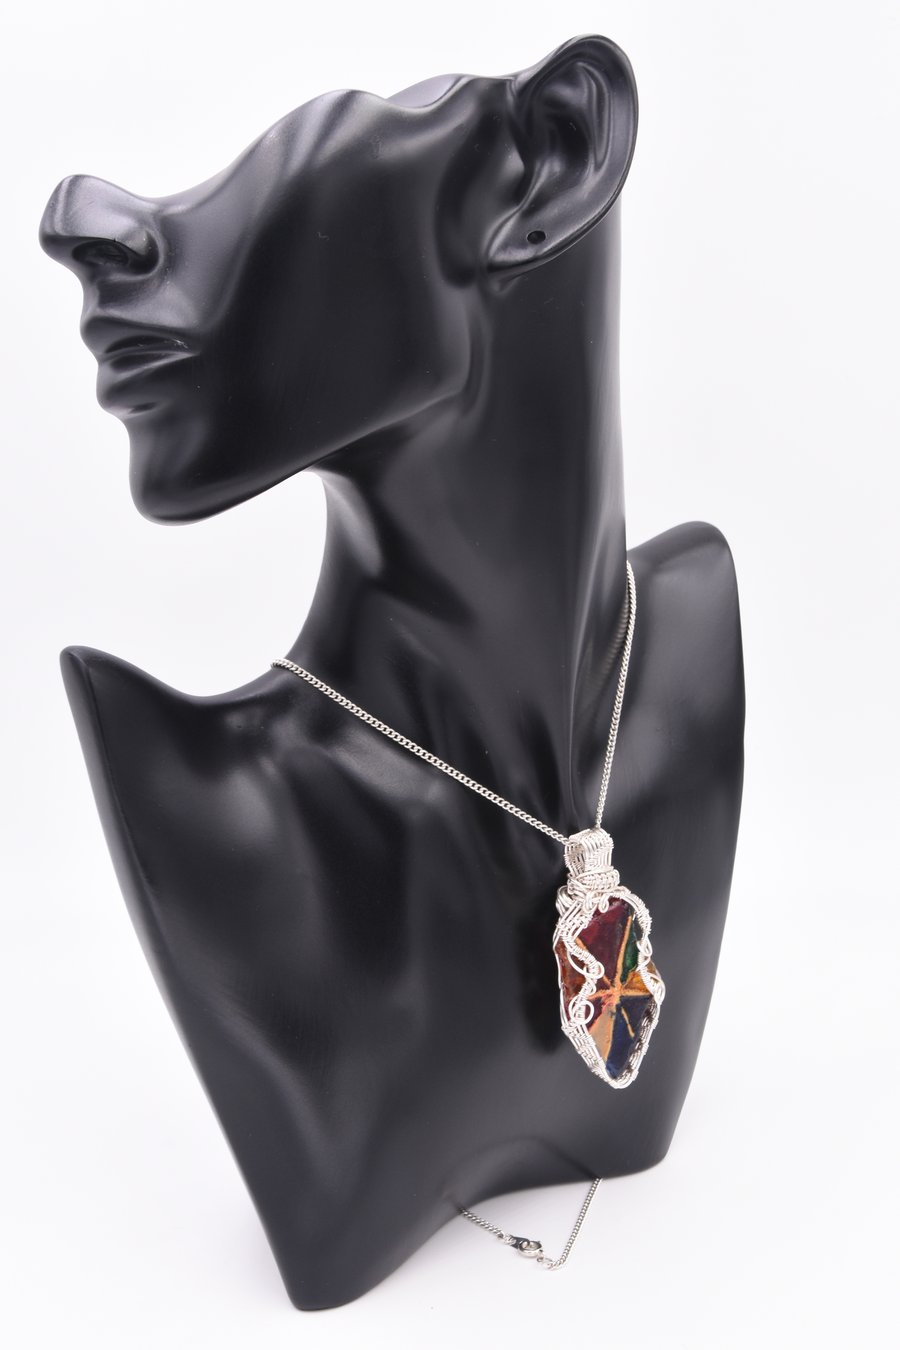 Hand painted seaglass pendant - Gaudi inspired